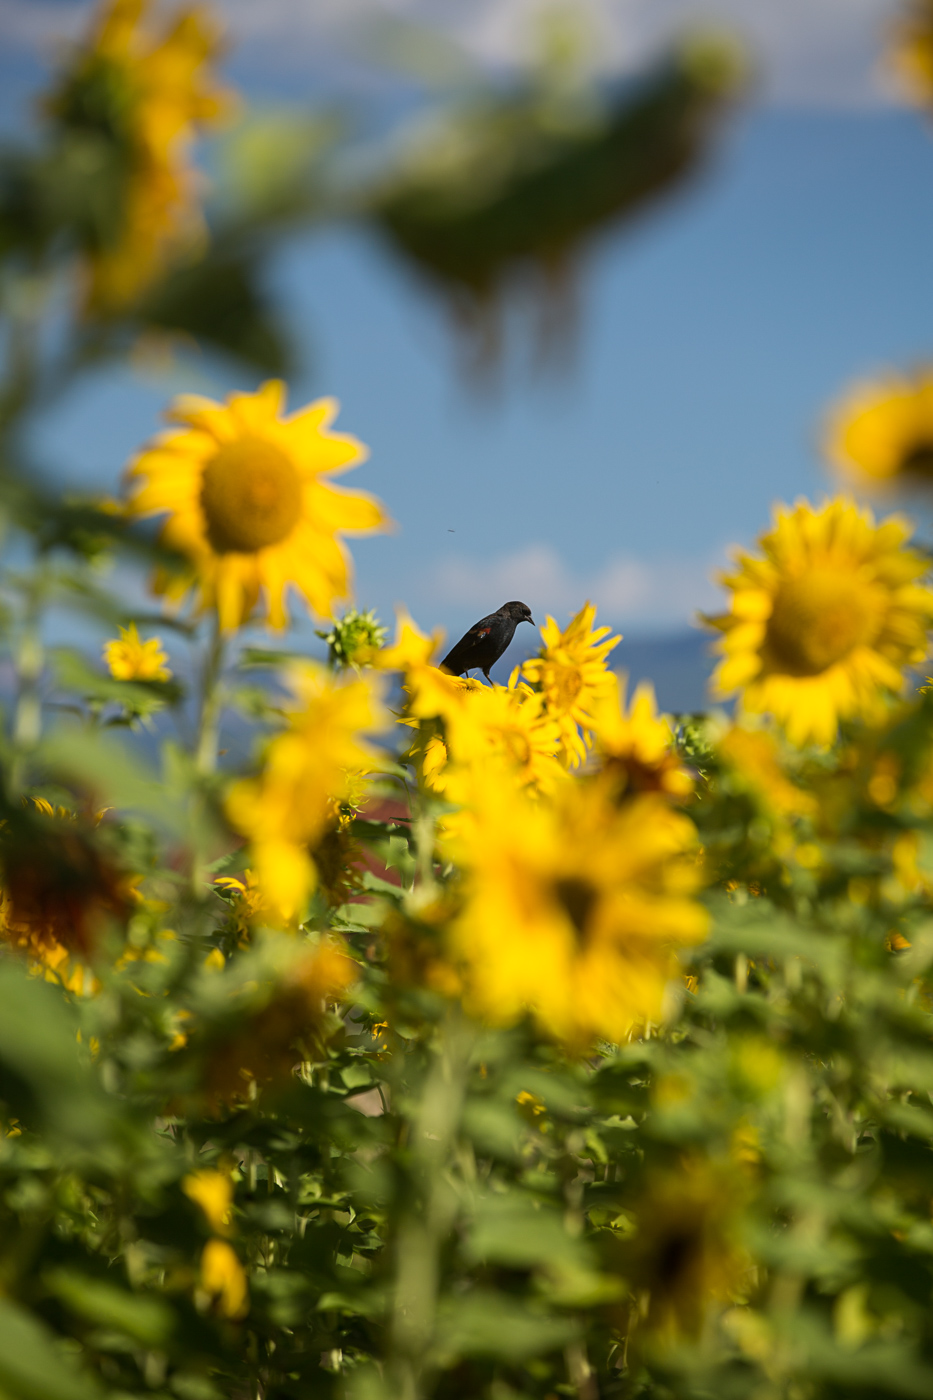 farm photographer - a bird sits on sunflowers in a field